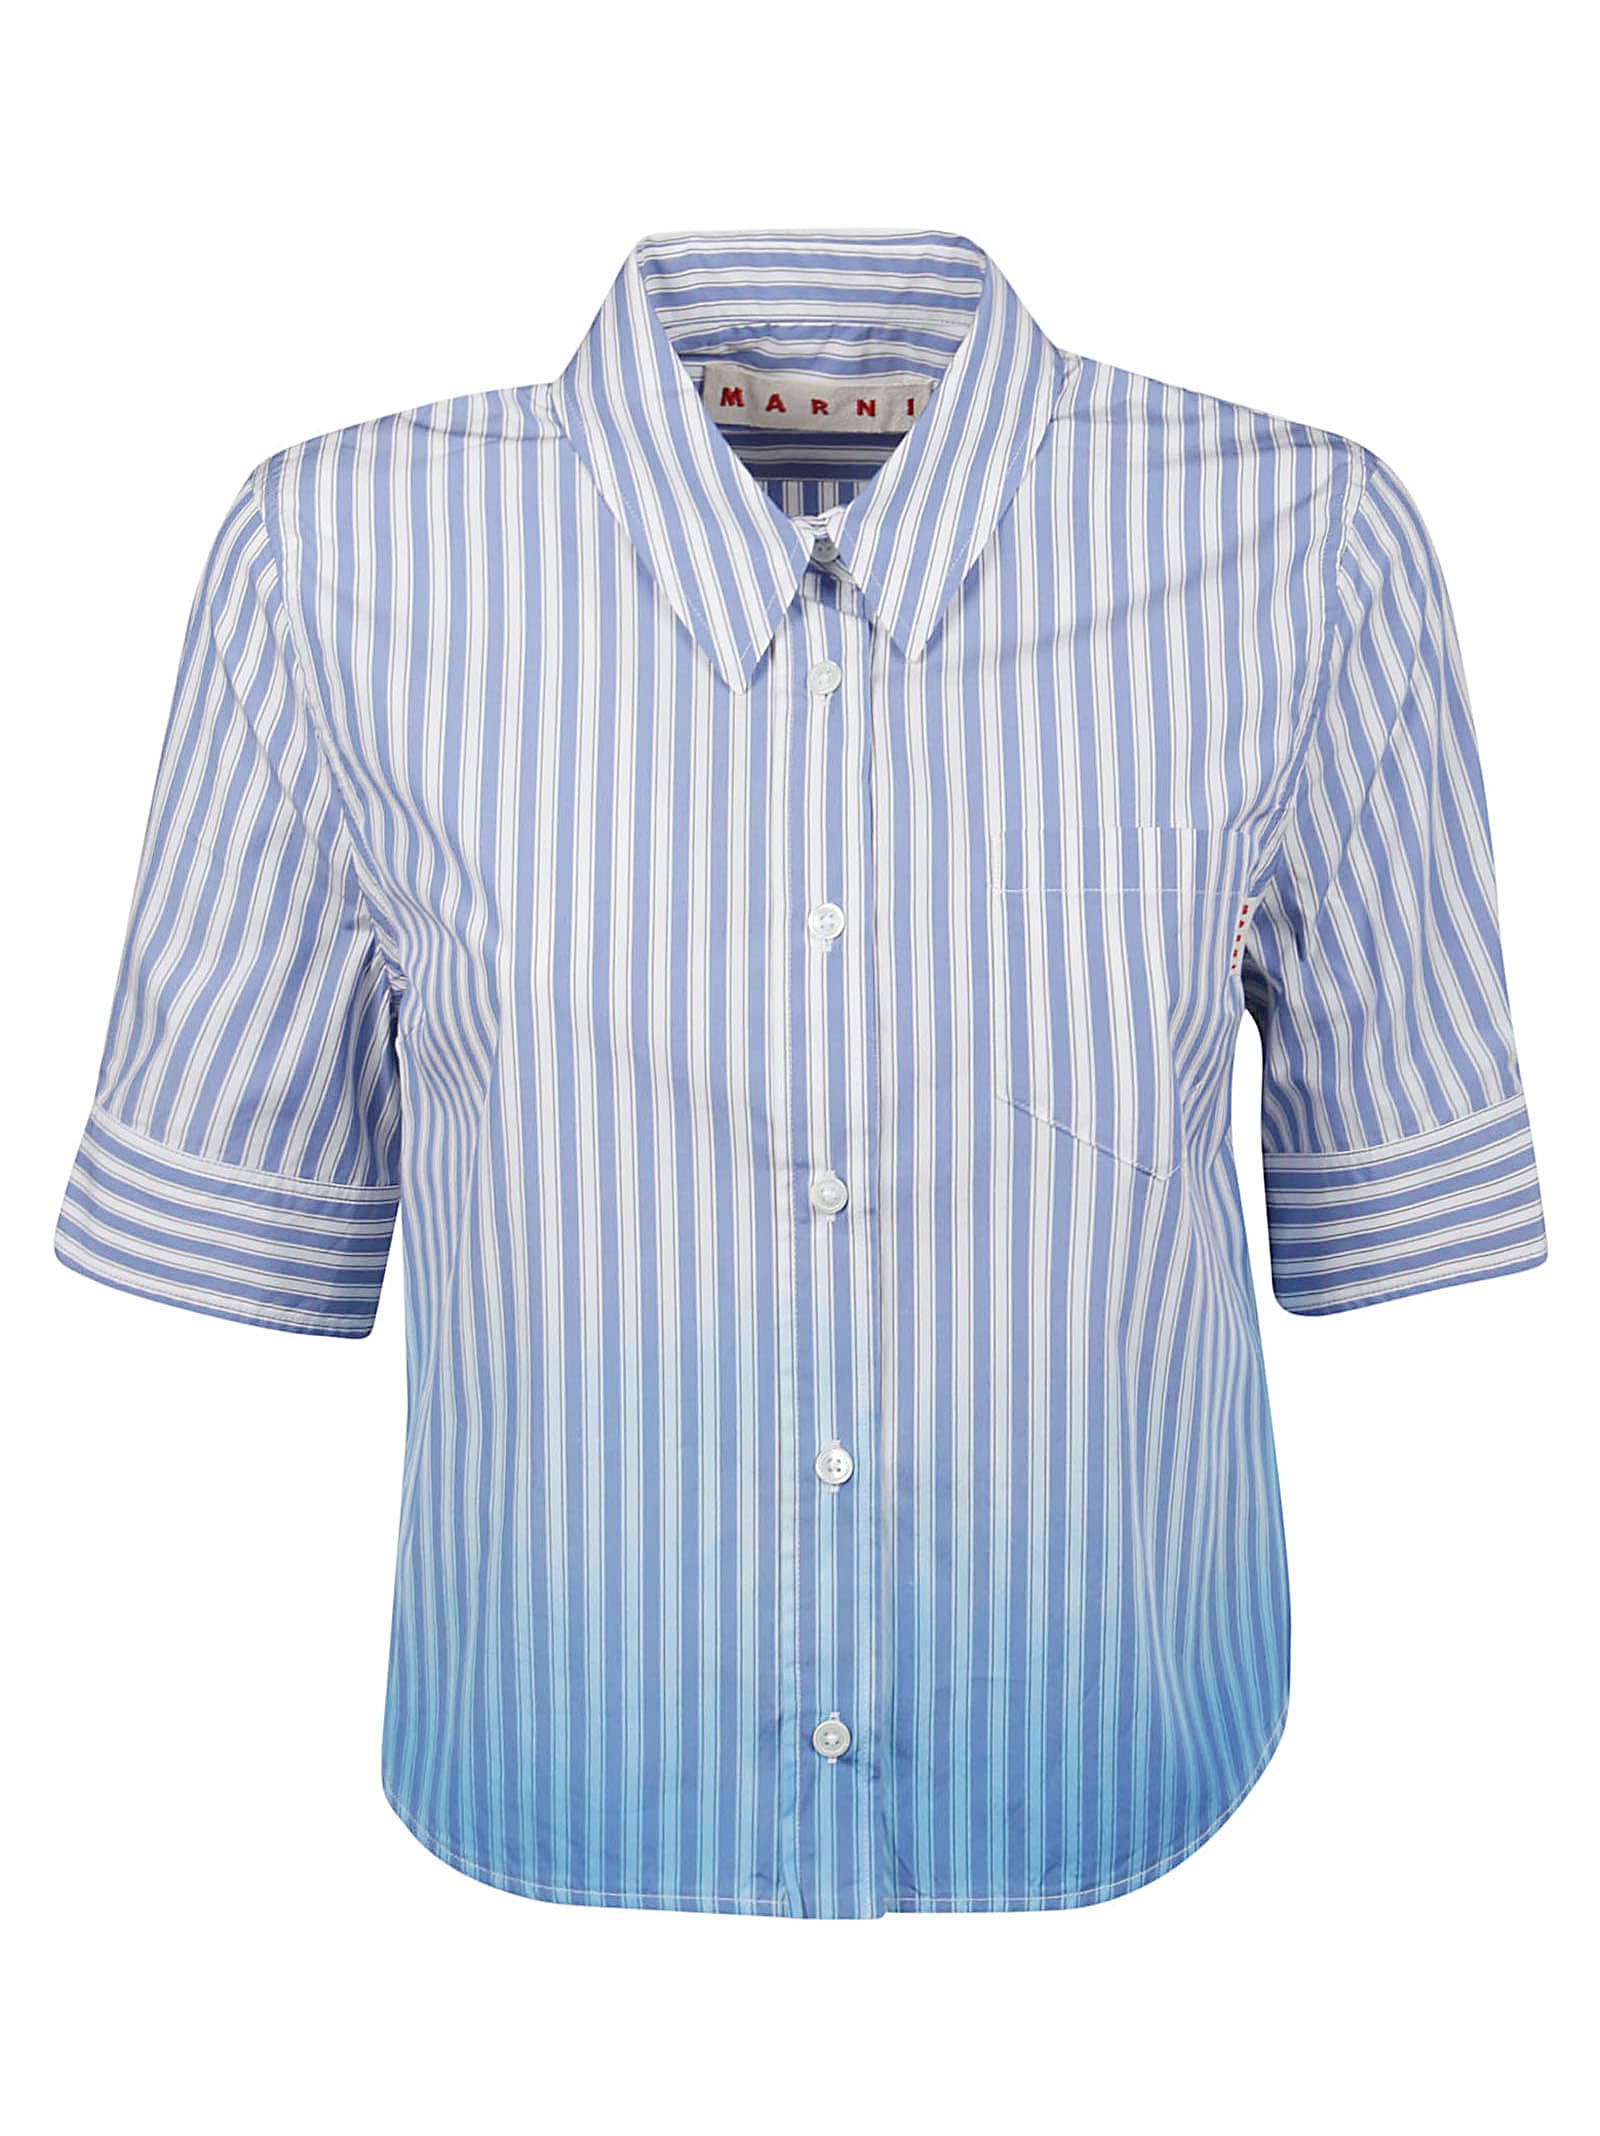 Marni Short Sleeve Classic Cropped Shirt